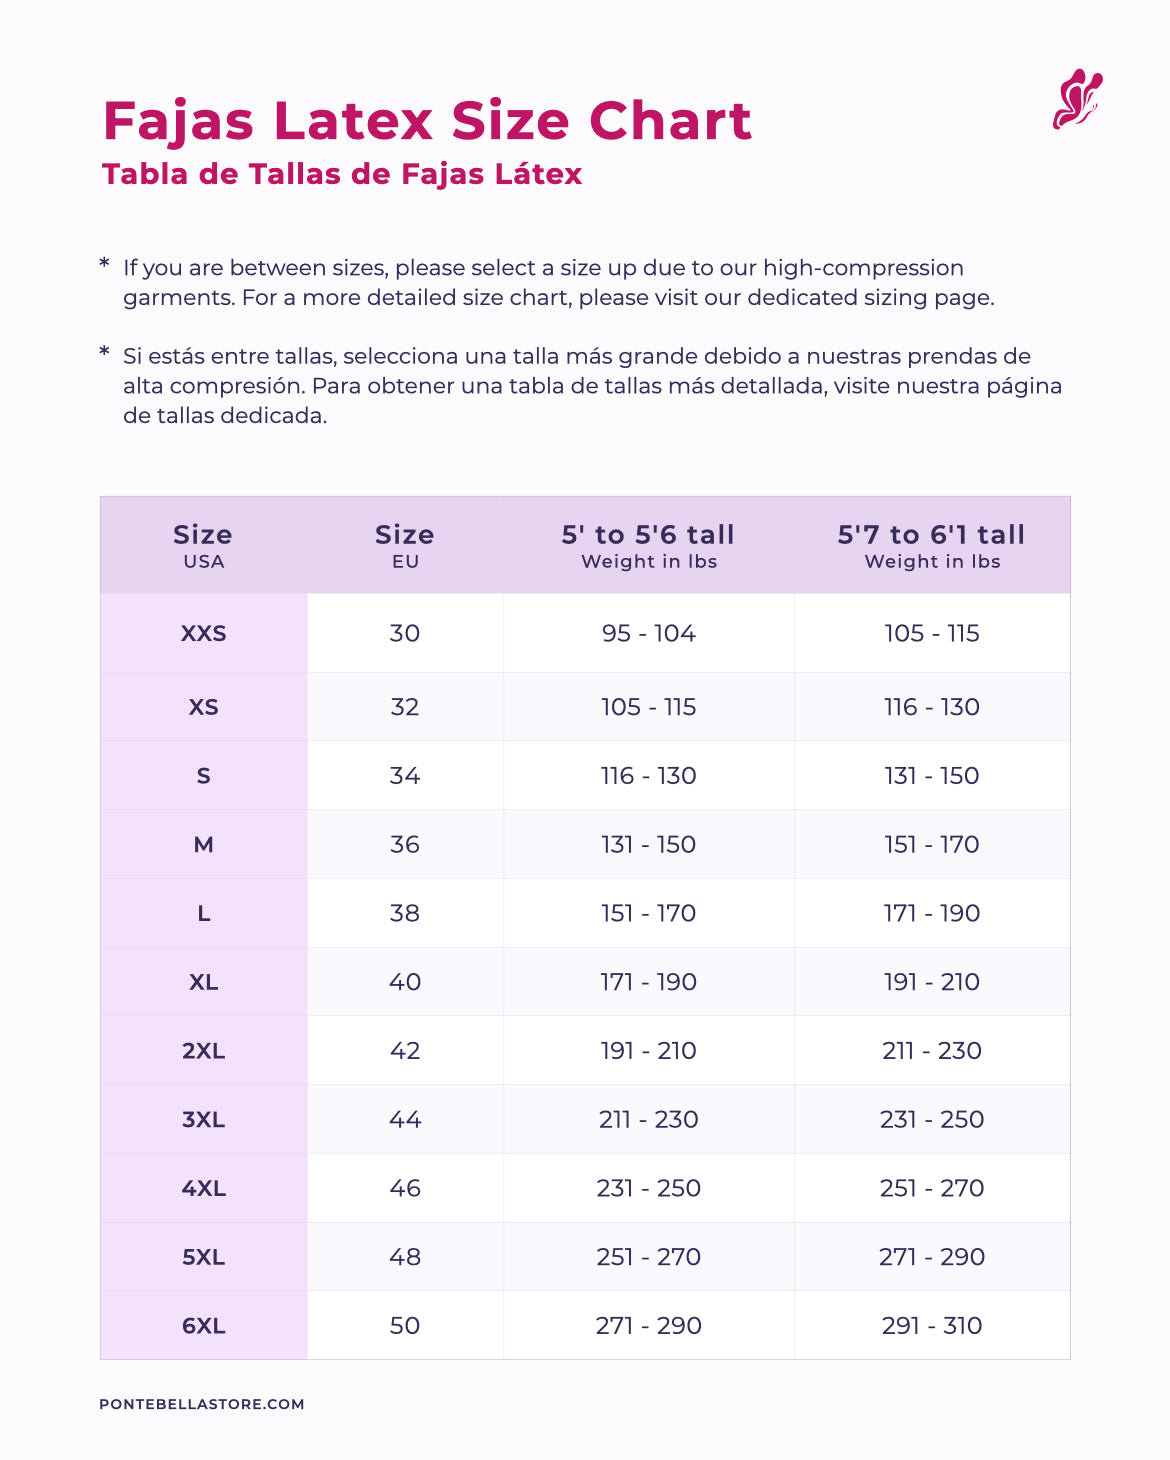 Fajas Latex Size Chart PonteBella